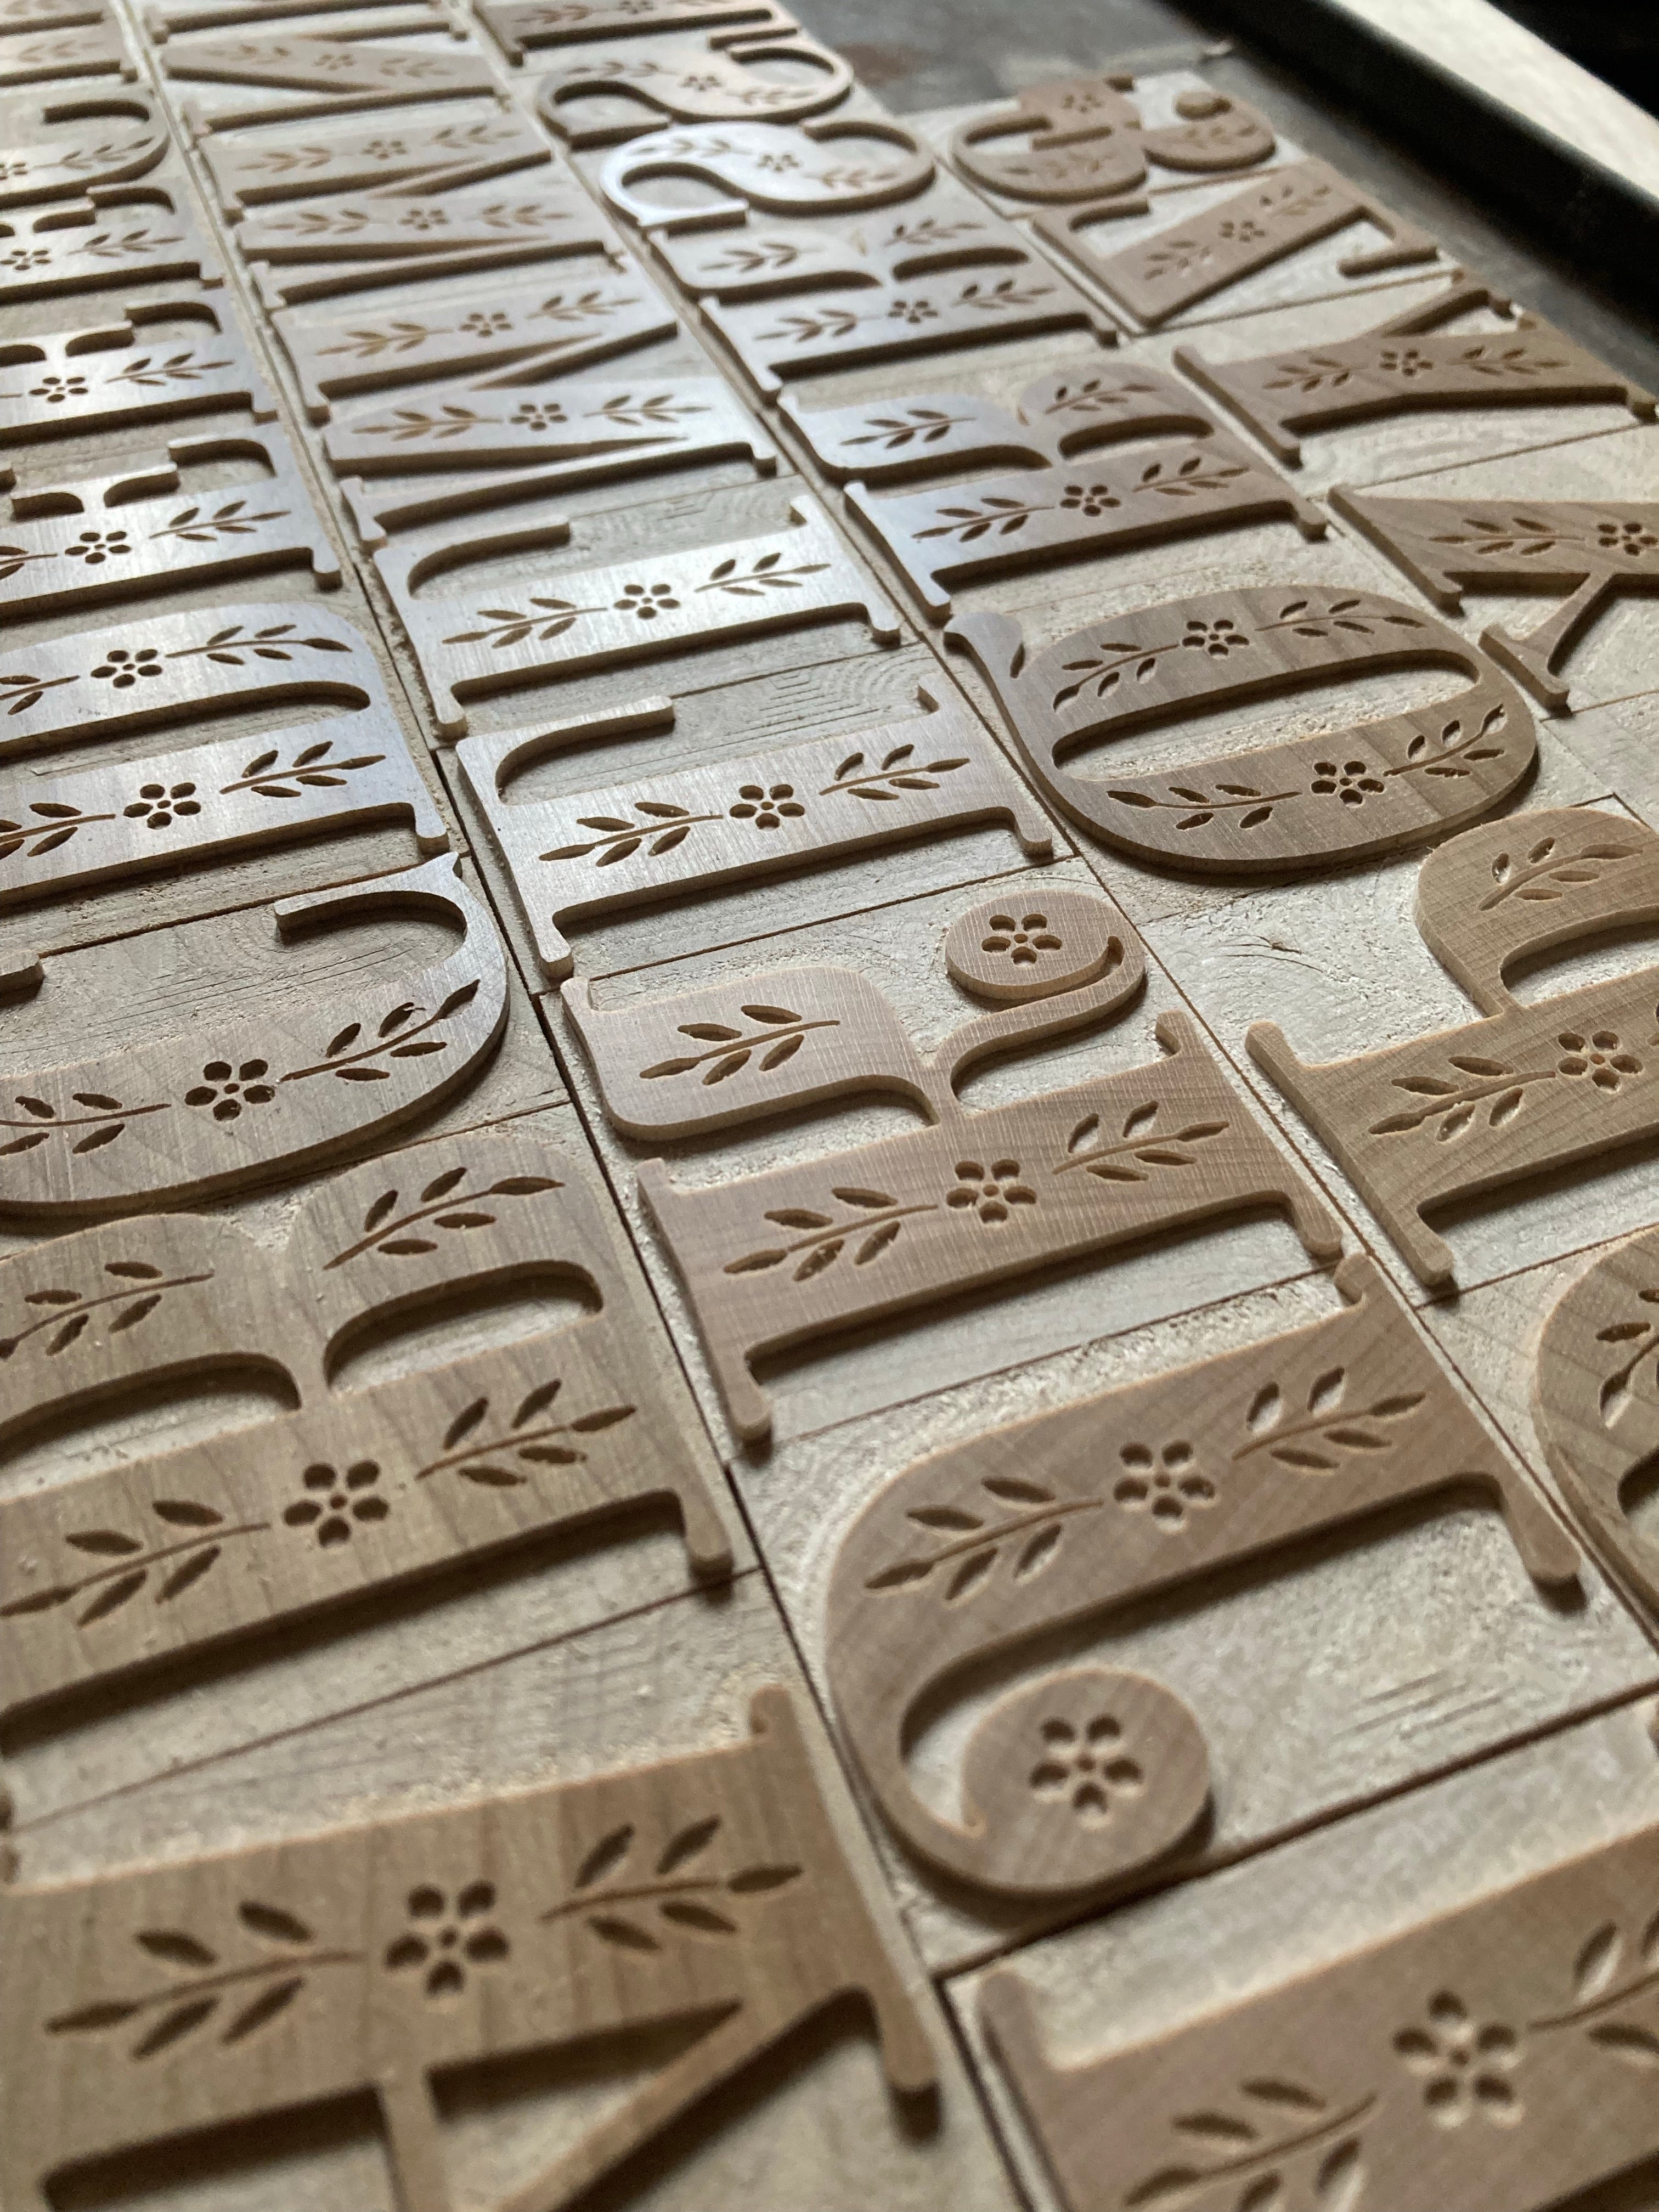 'Lidlington' Ornamented Letterpress Woodtype Typeface